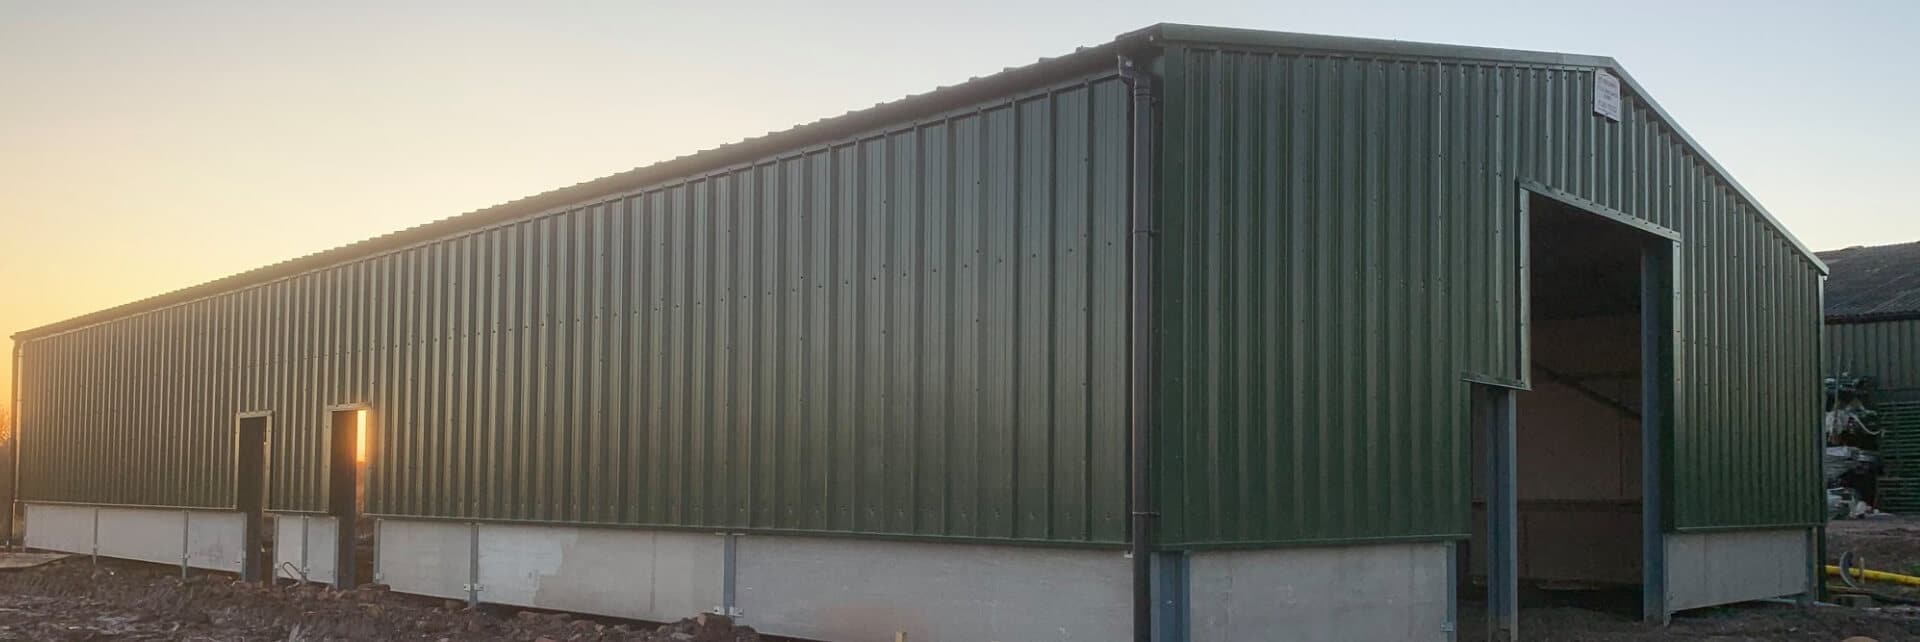 Steel Framed Building - Green Metal Cladding